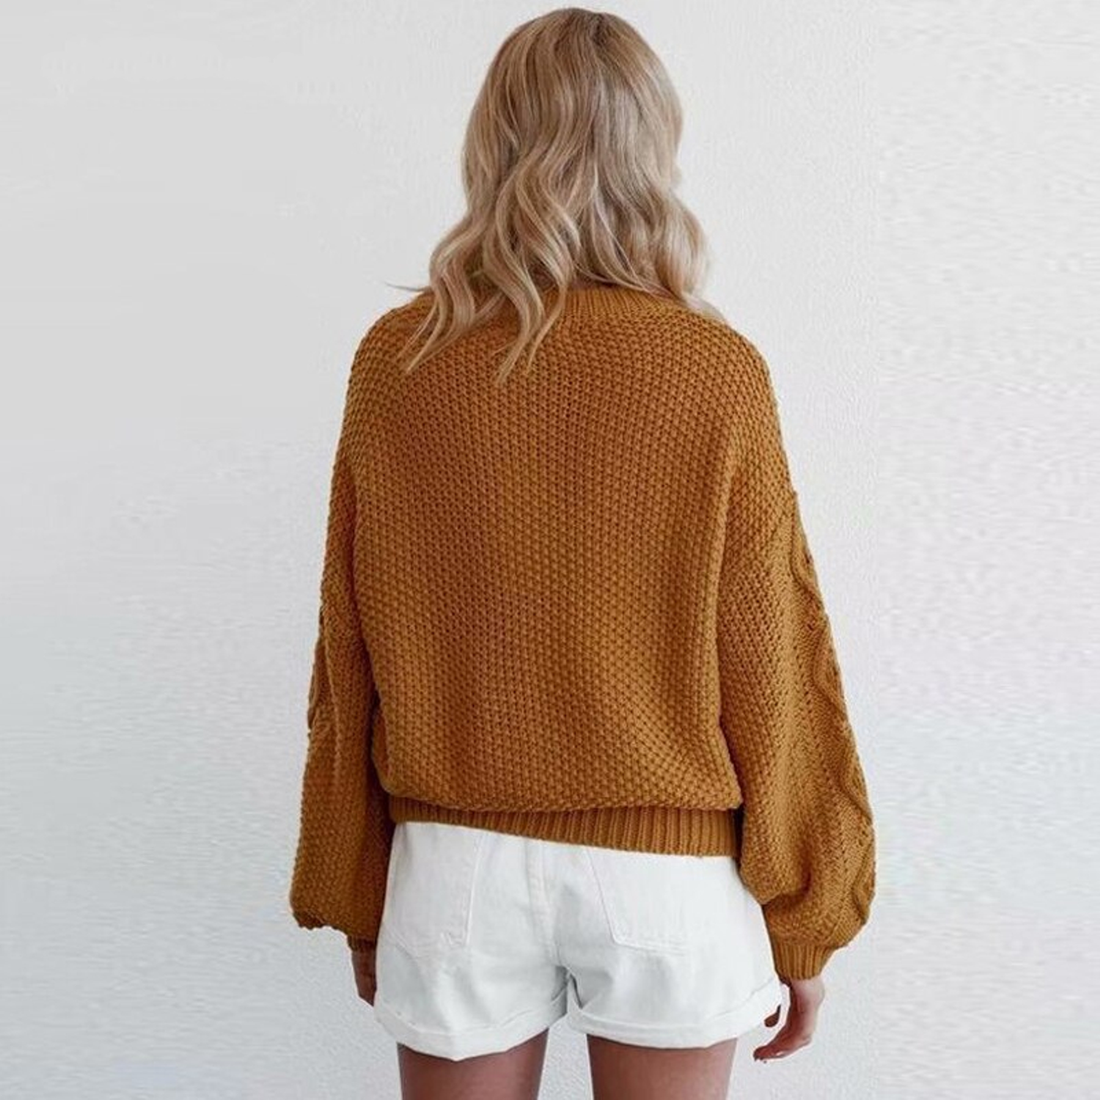 Women's Autumn/Winter Knitted Long Sleeve Sweater